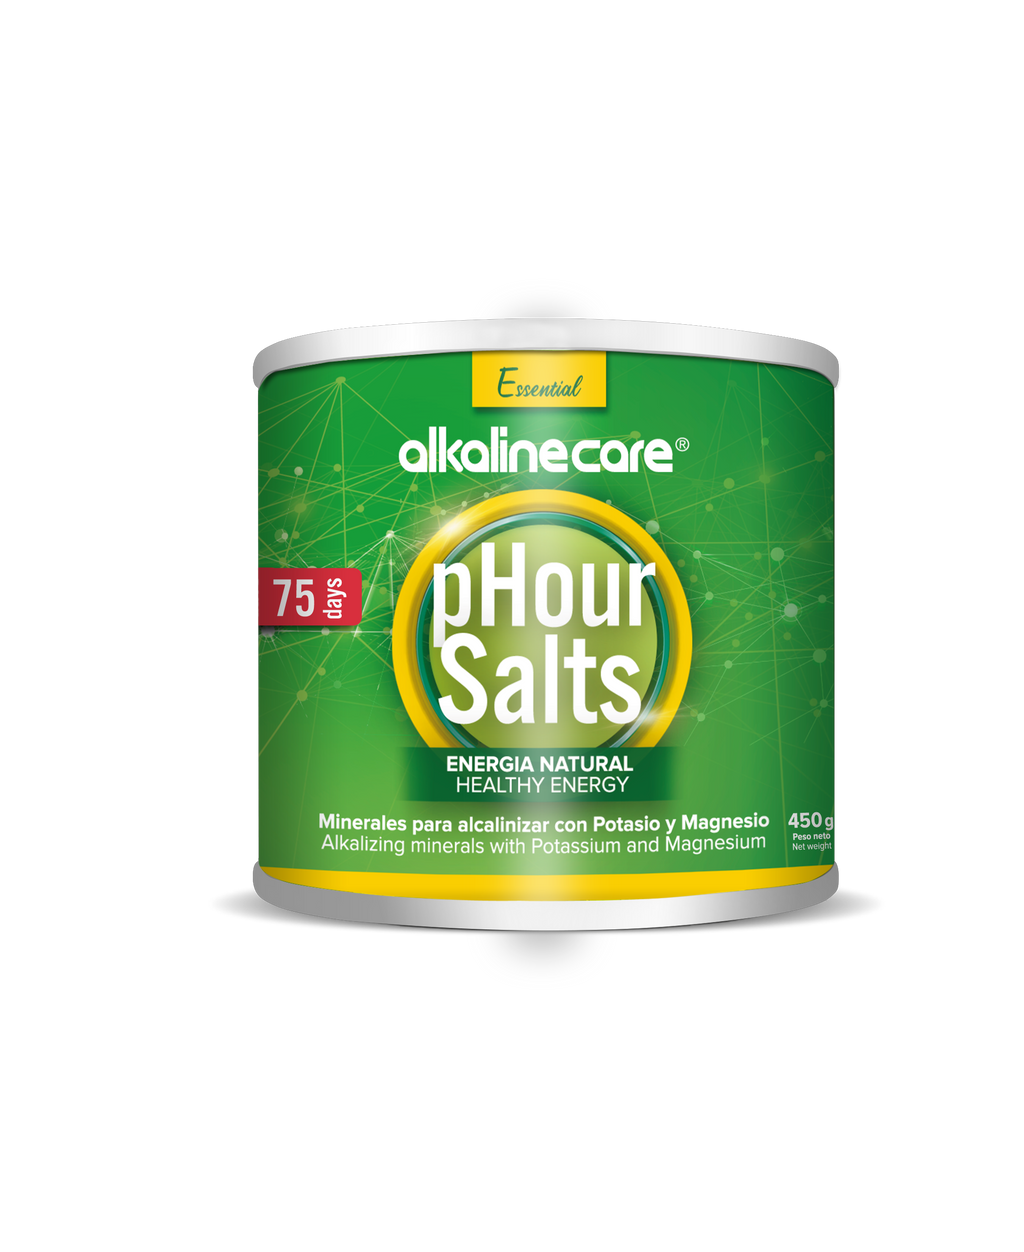 pHour Salts